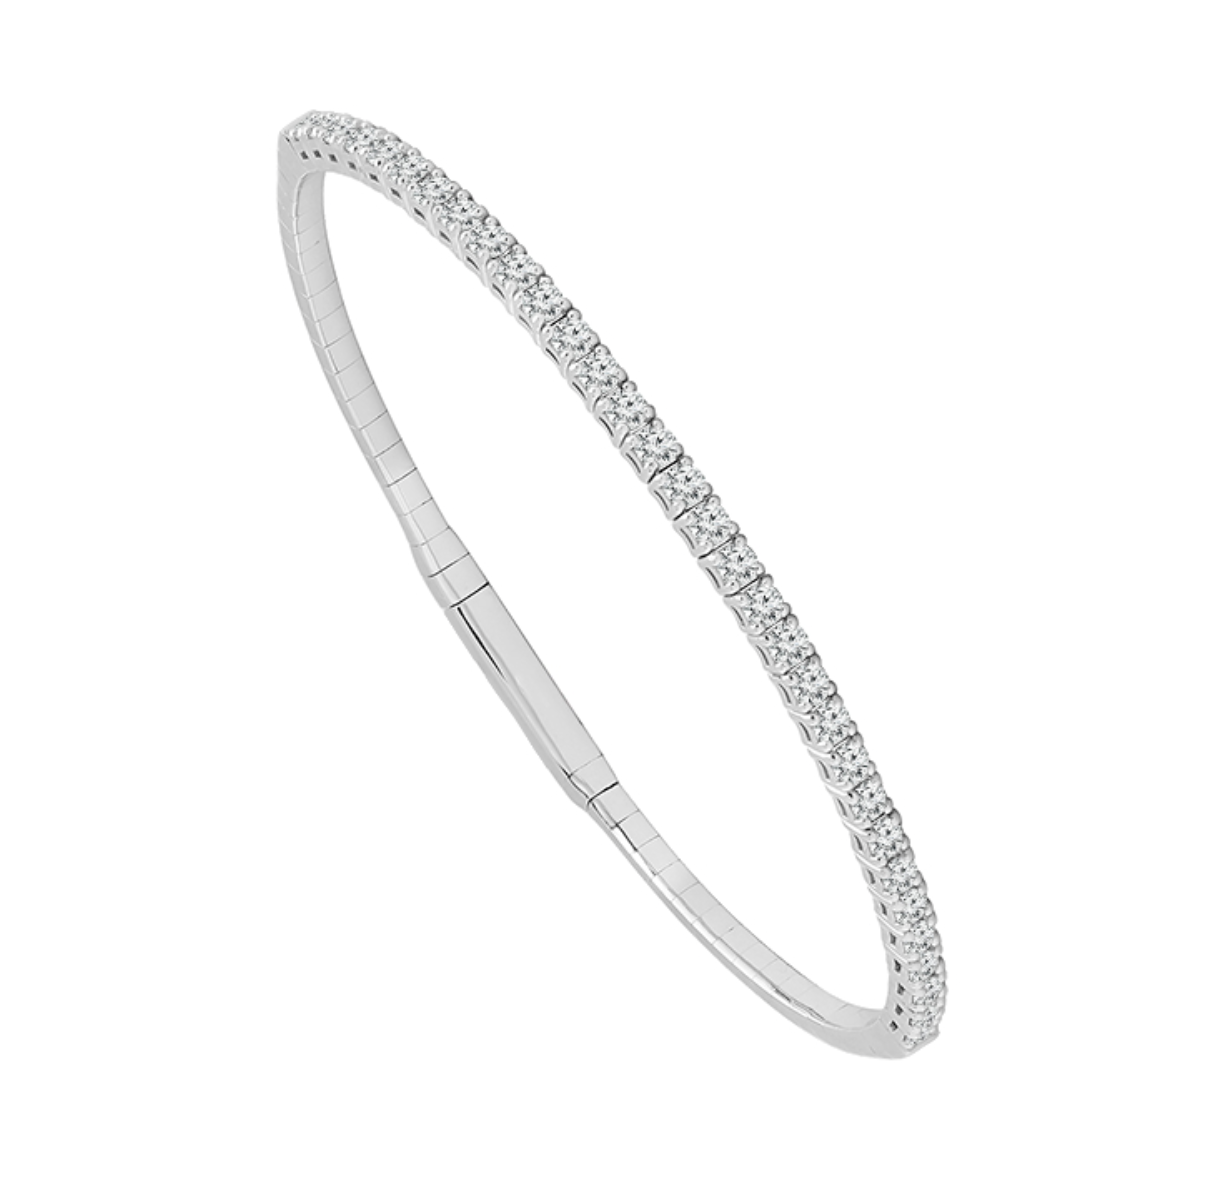 IDD 1.40 ct diamond bangle bracelet fsbg5040